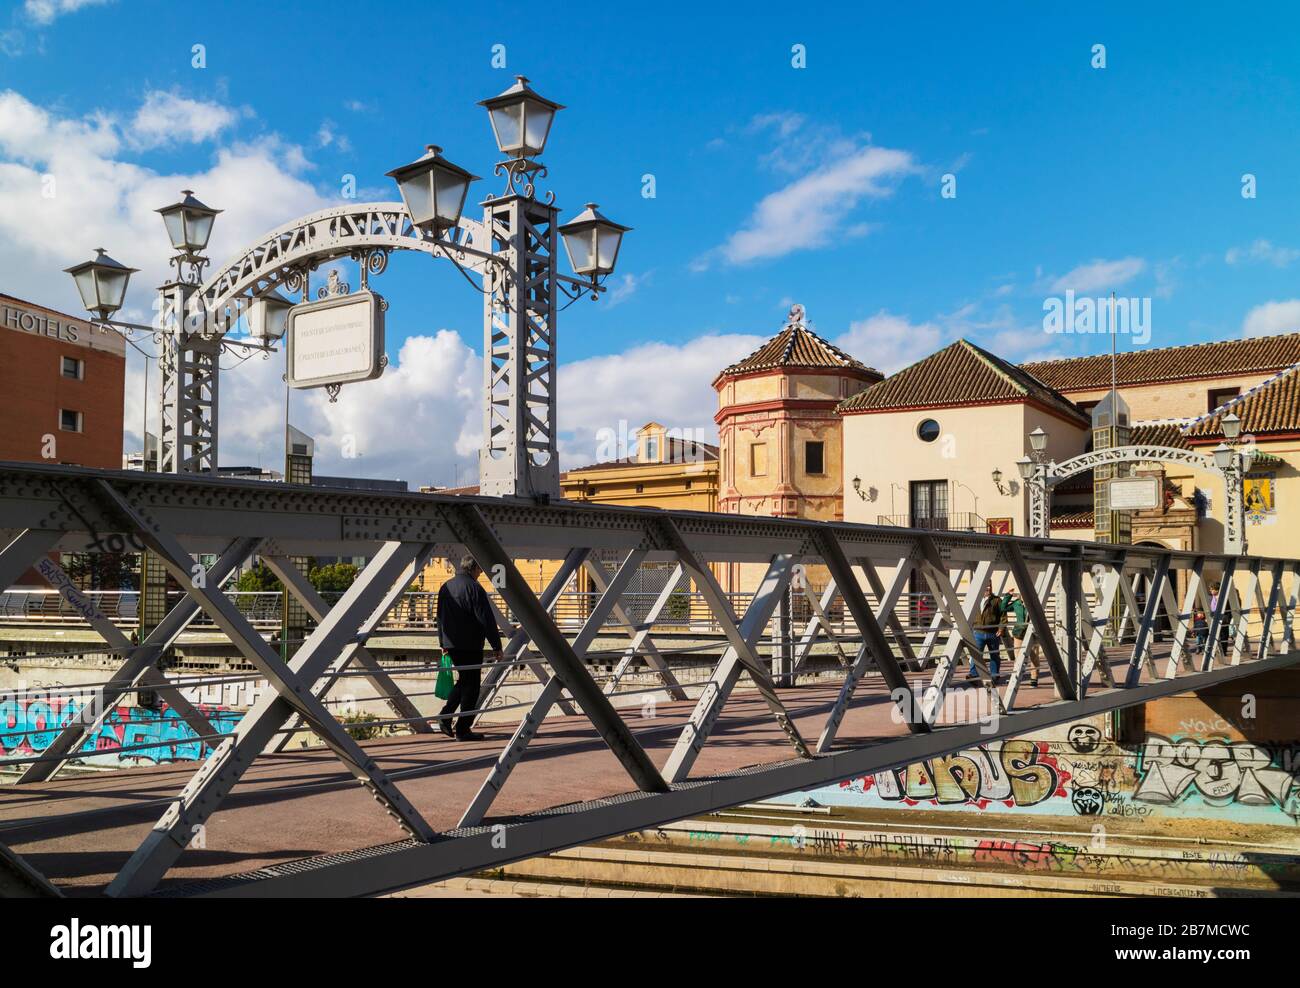 Malaga, Costa del sol, Malaga Province, Andalousie, sud de l'Espagne. Le pont de Saint-Domingue, alias le pont allemand. Église de Saint-Domingue derrière. Banque D'Images